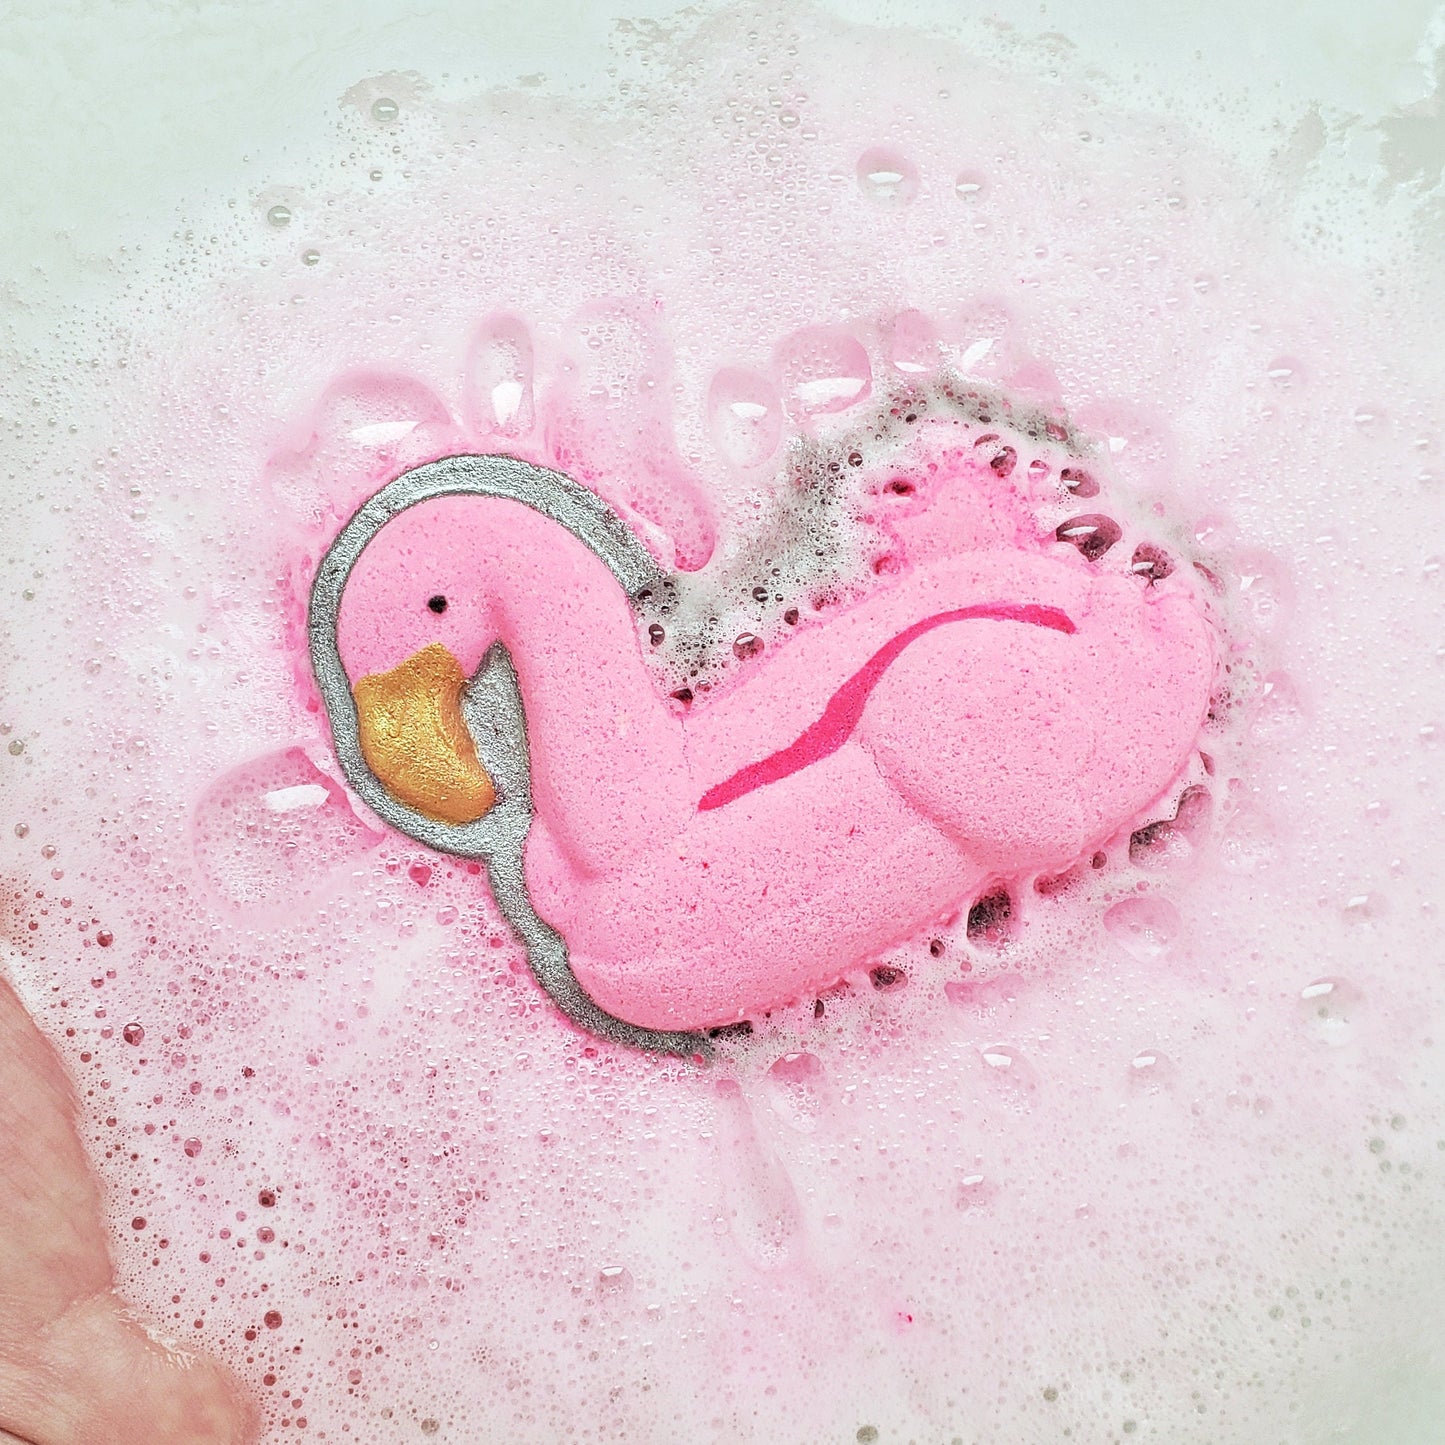 Flamingo Bath Bomb (1) With Surprise Toy Inside